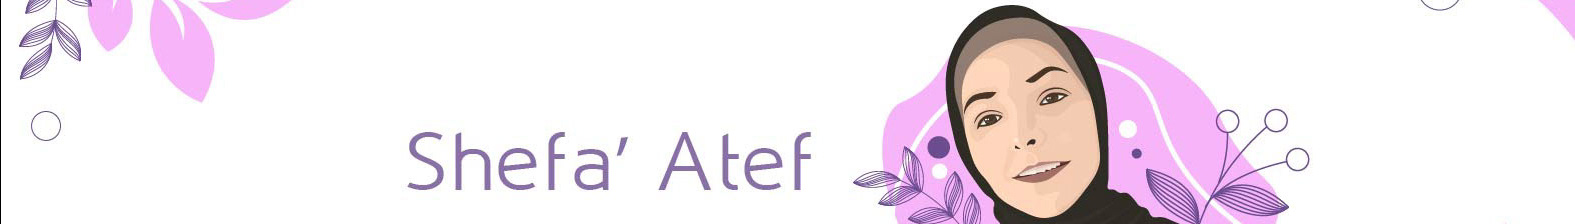 Banner de perfil de Shefa' Alhendi